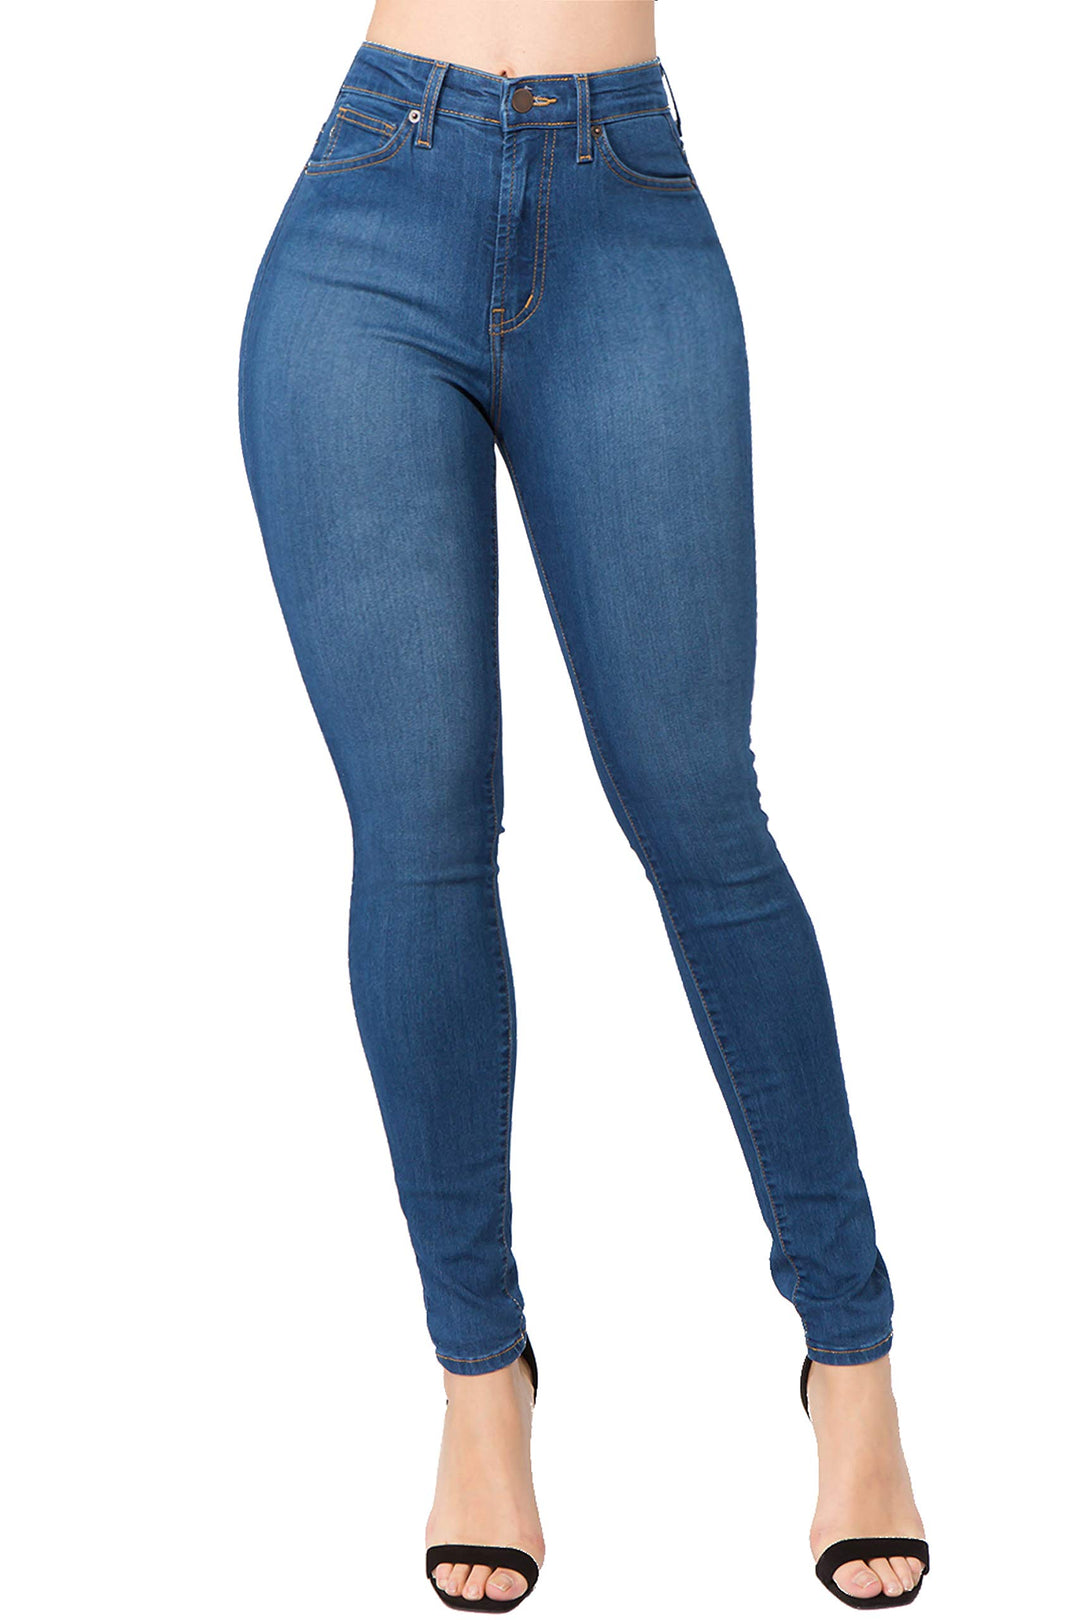 Denim Jeans - Shaners Merchandise